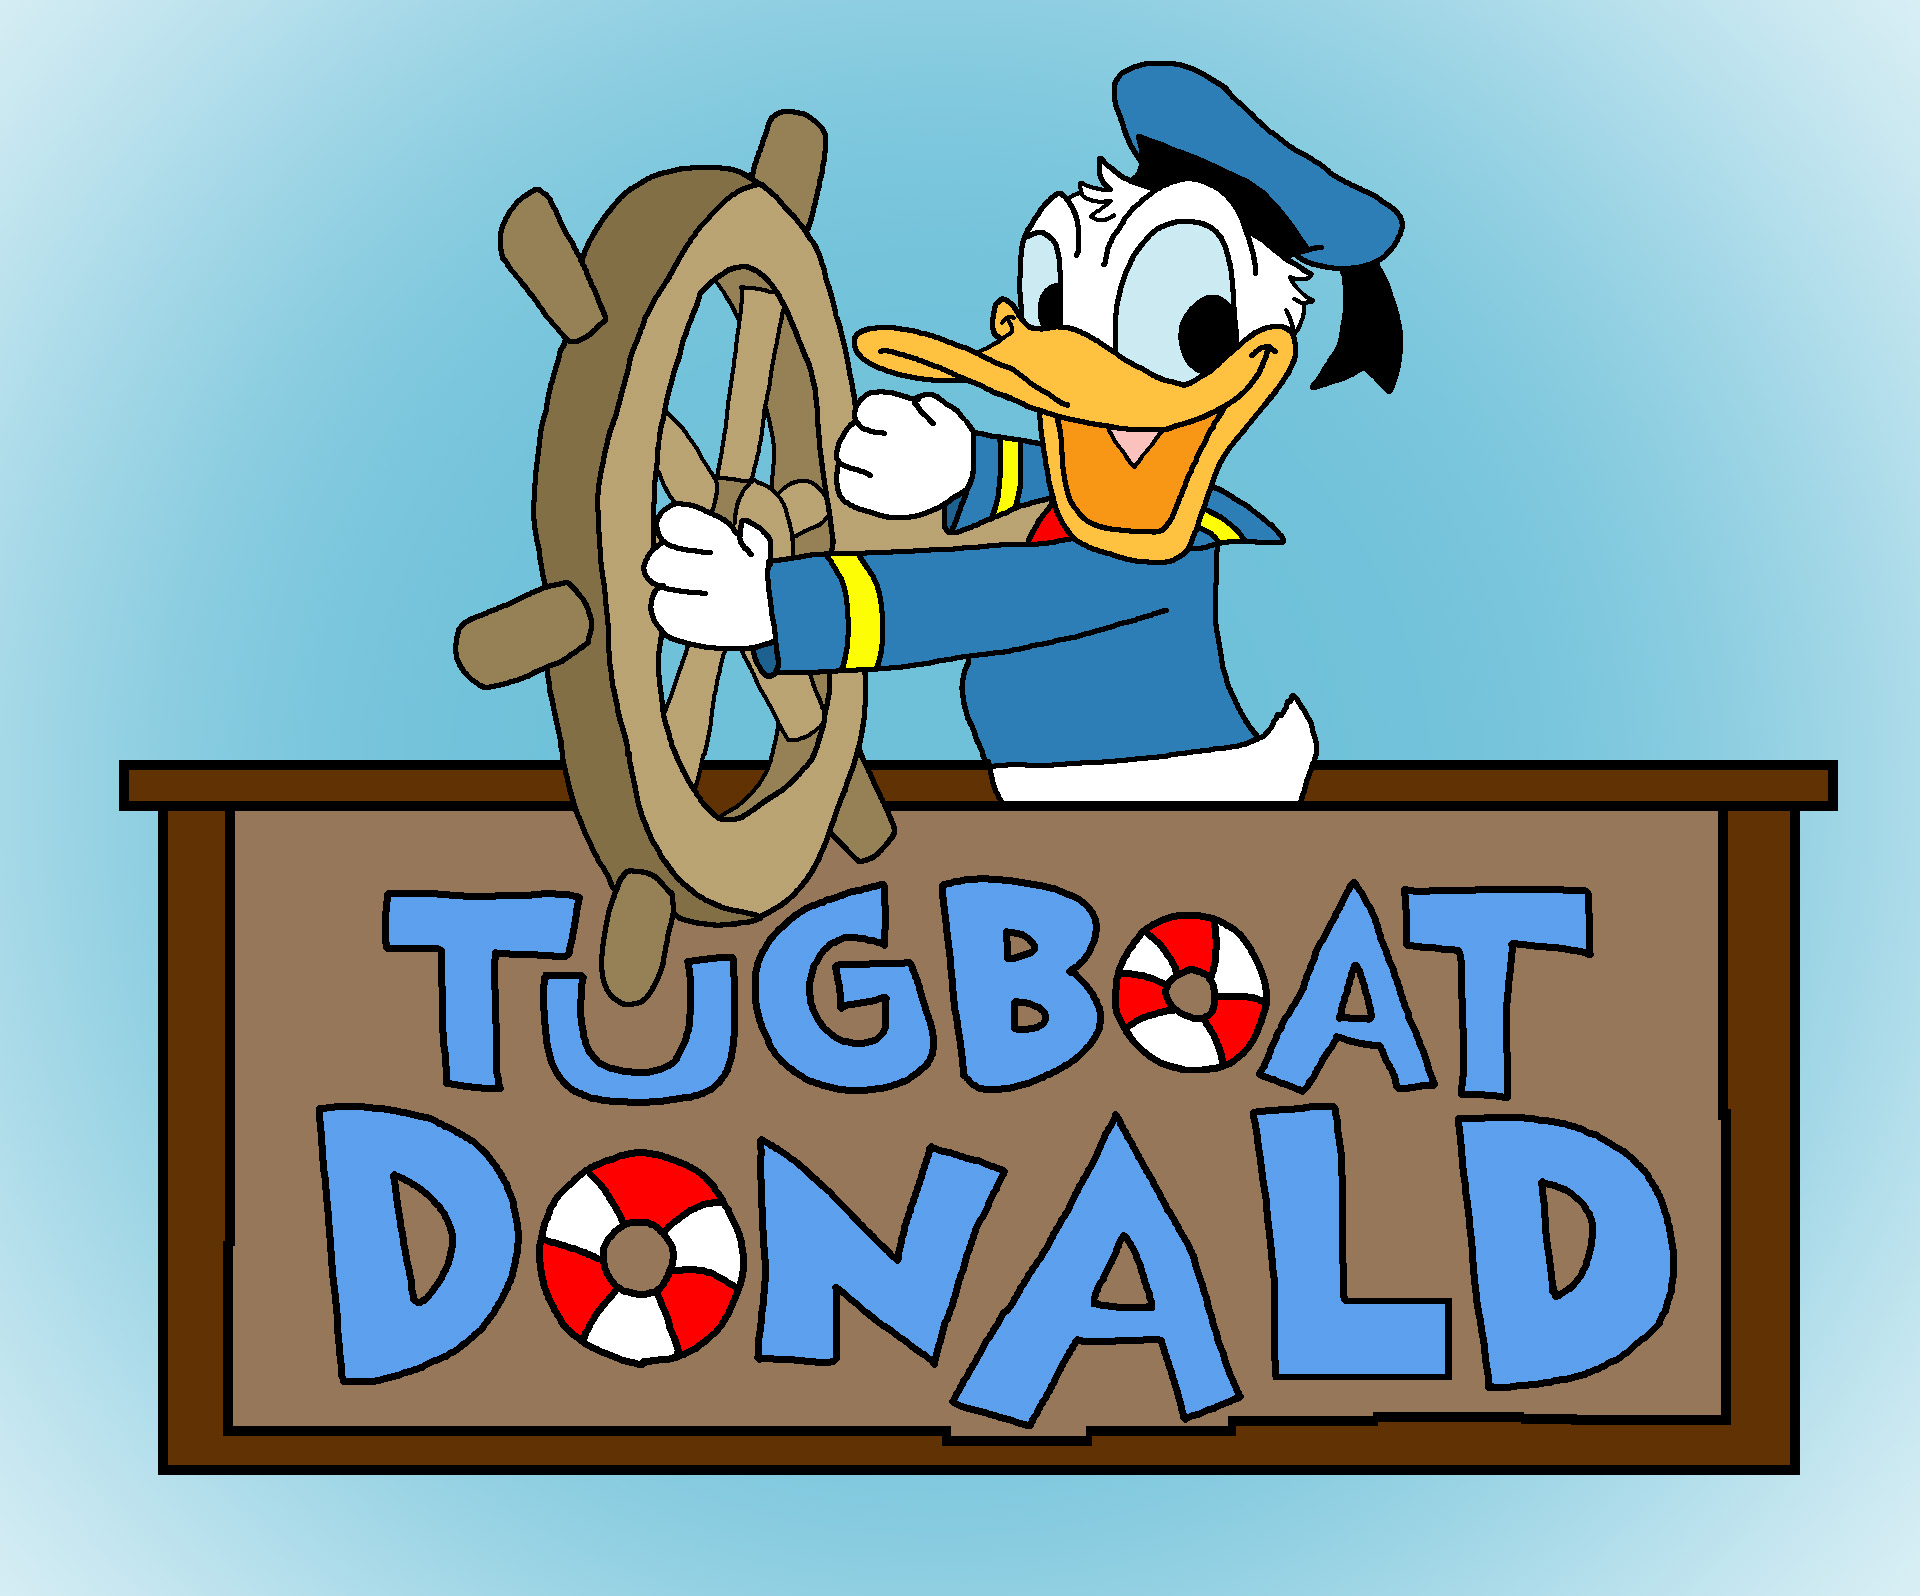 Tugboat-Donald-logo.jpg